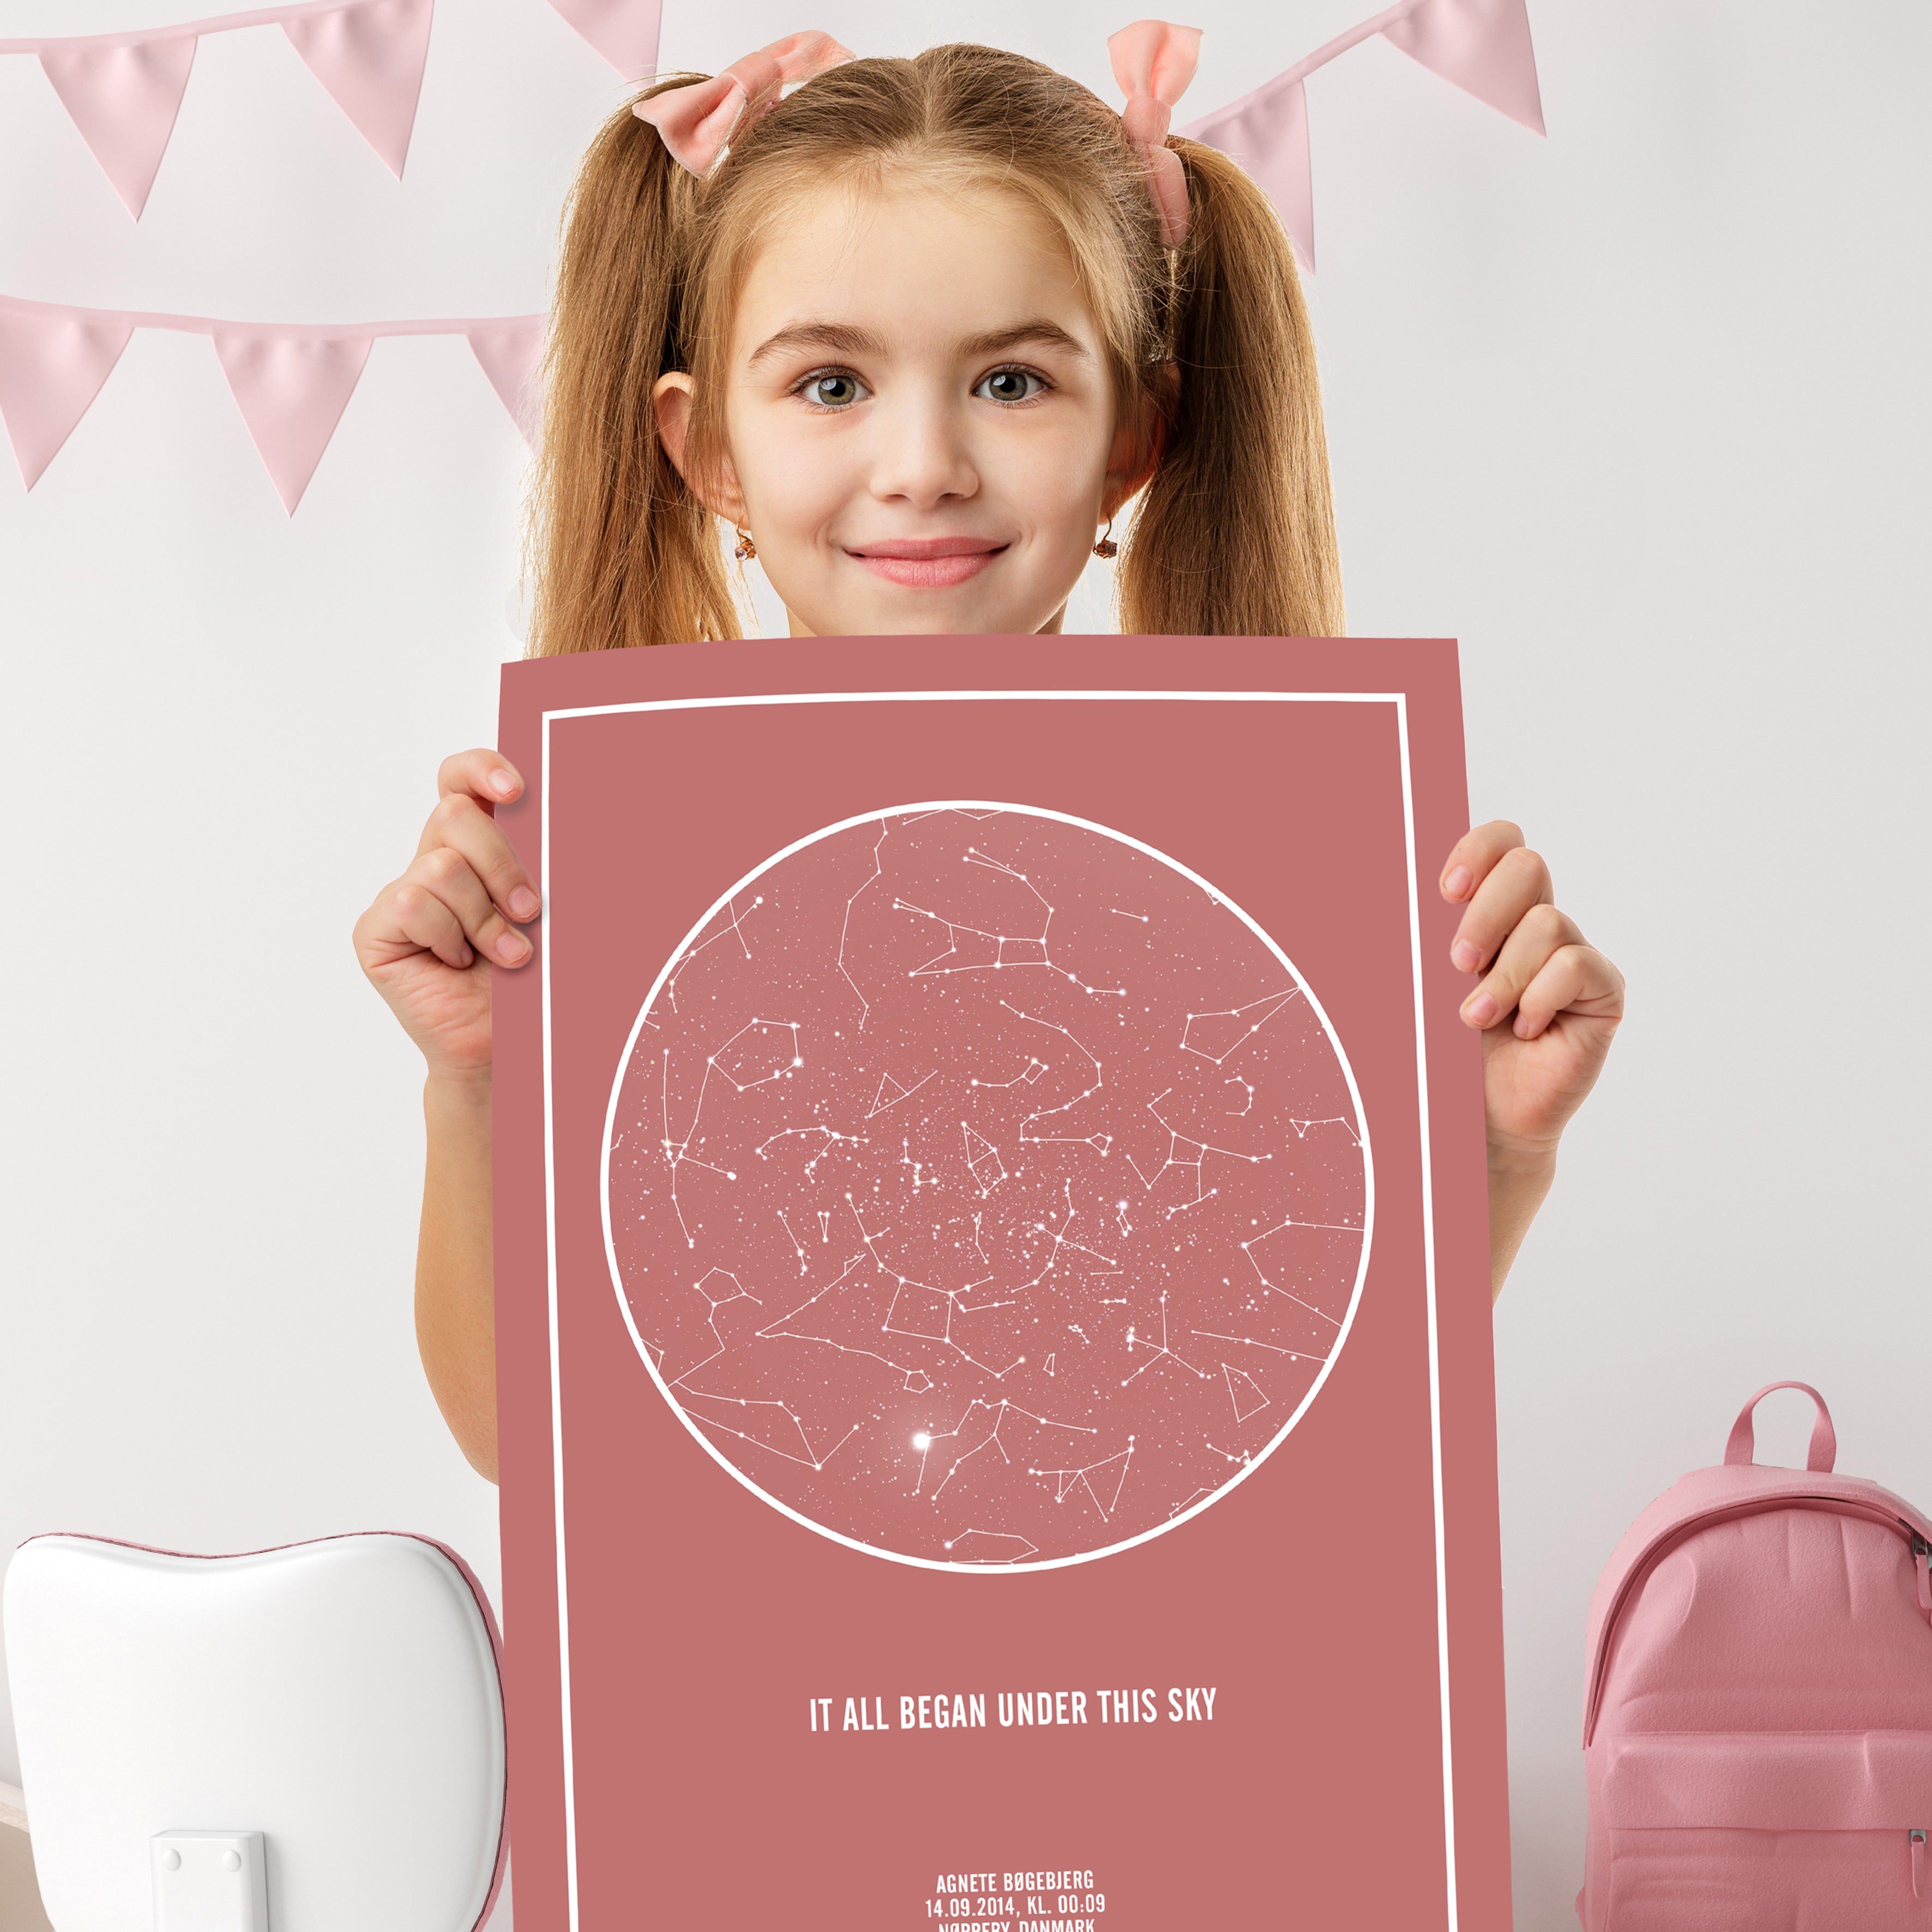 Pige med stjernehimmel plakat, som hun har fået til fødselsdag.